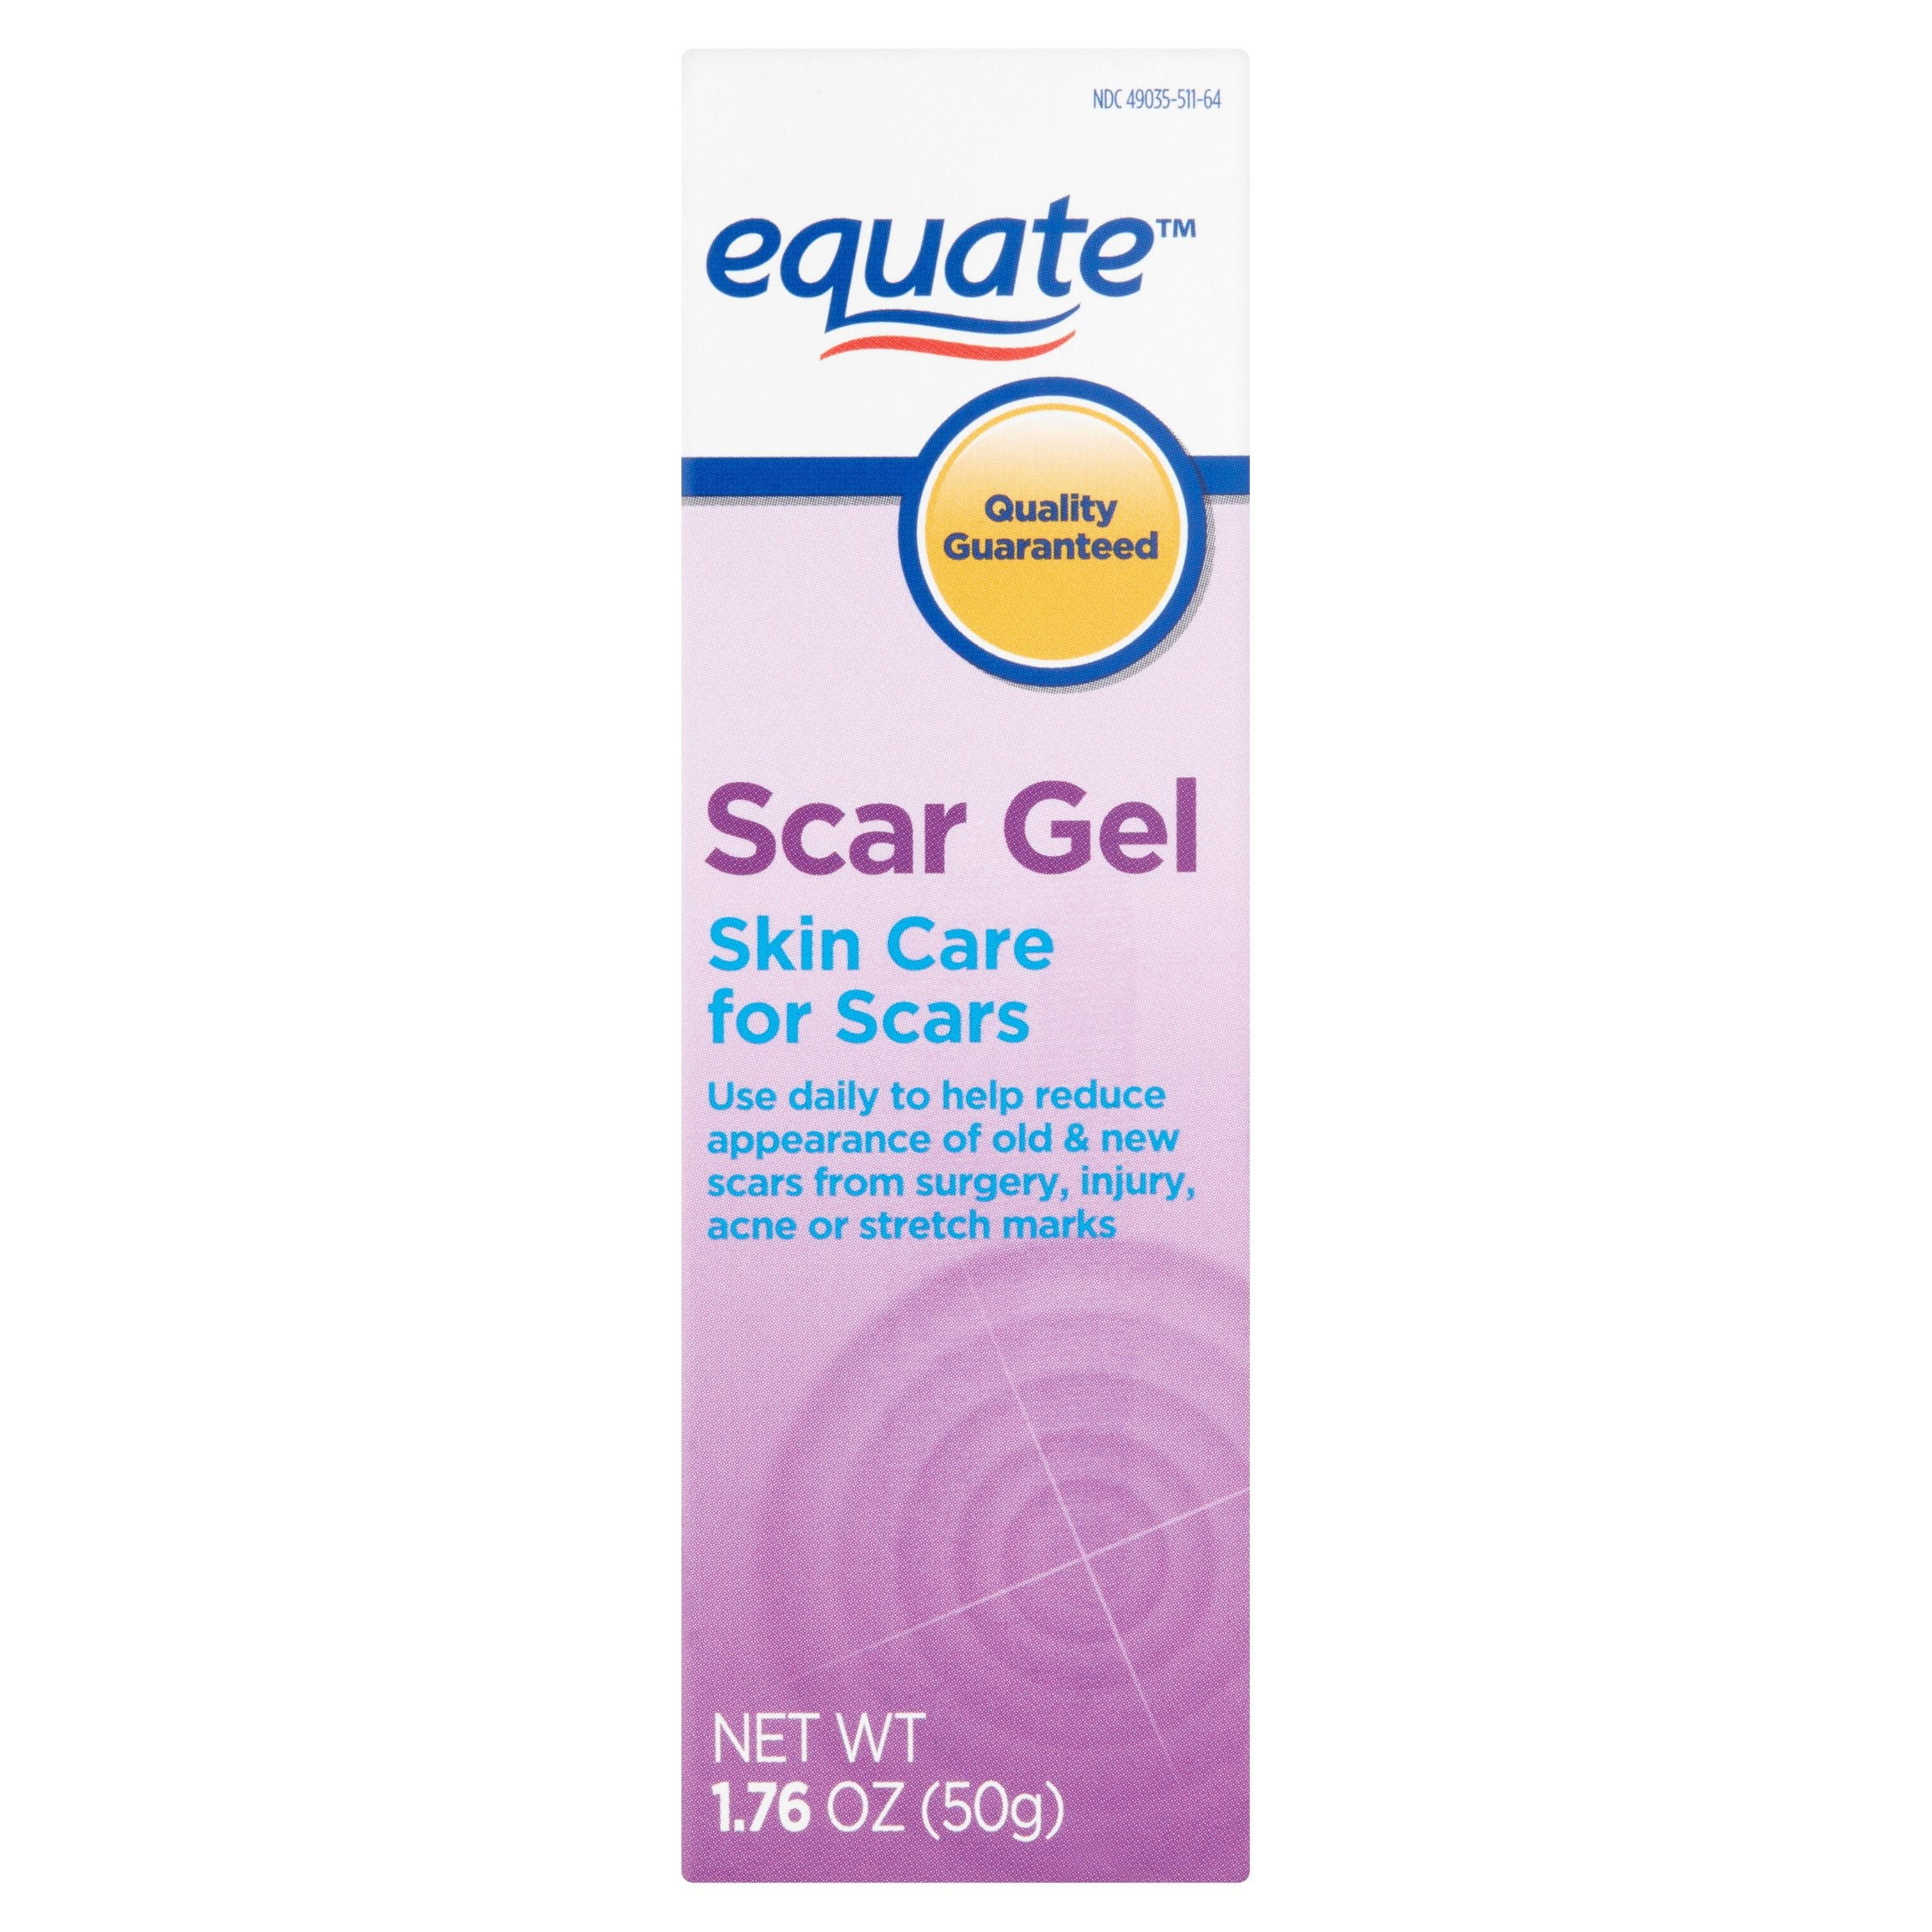 Scar gel. Скар гель. Heal term scar Gel.